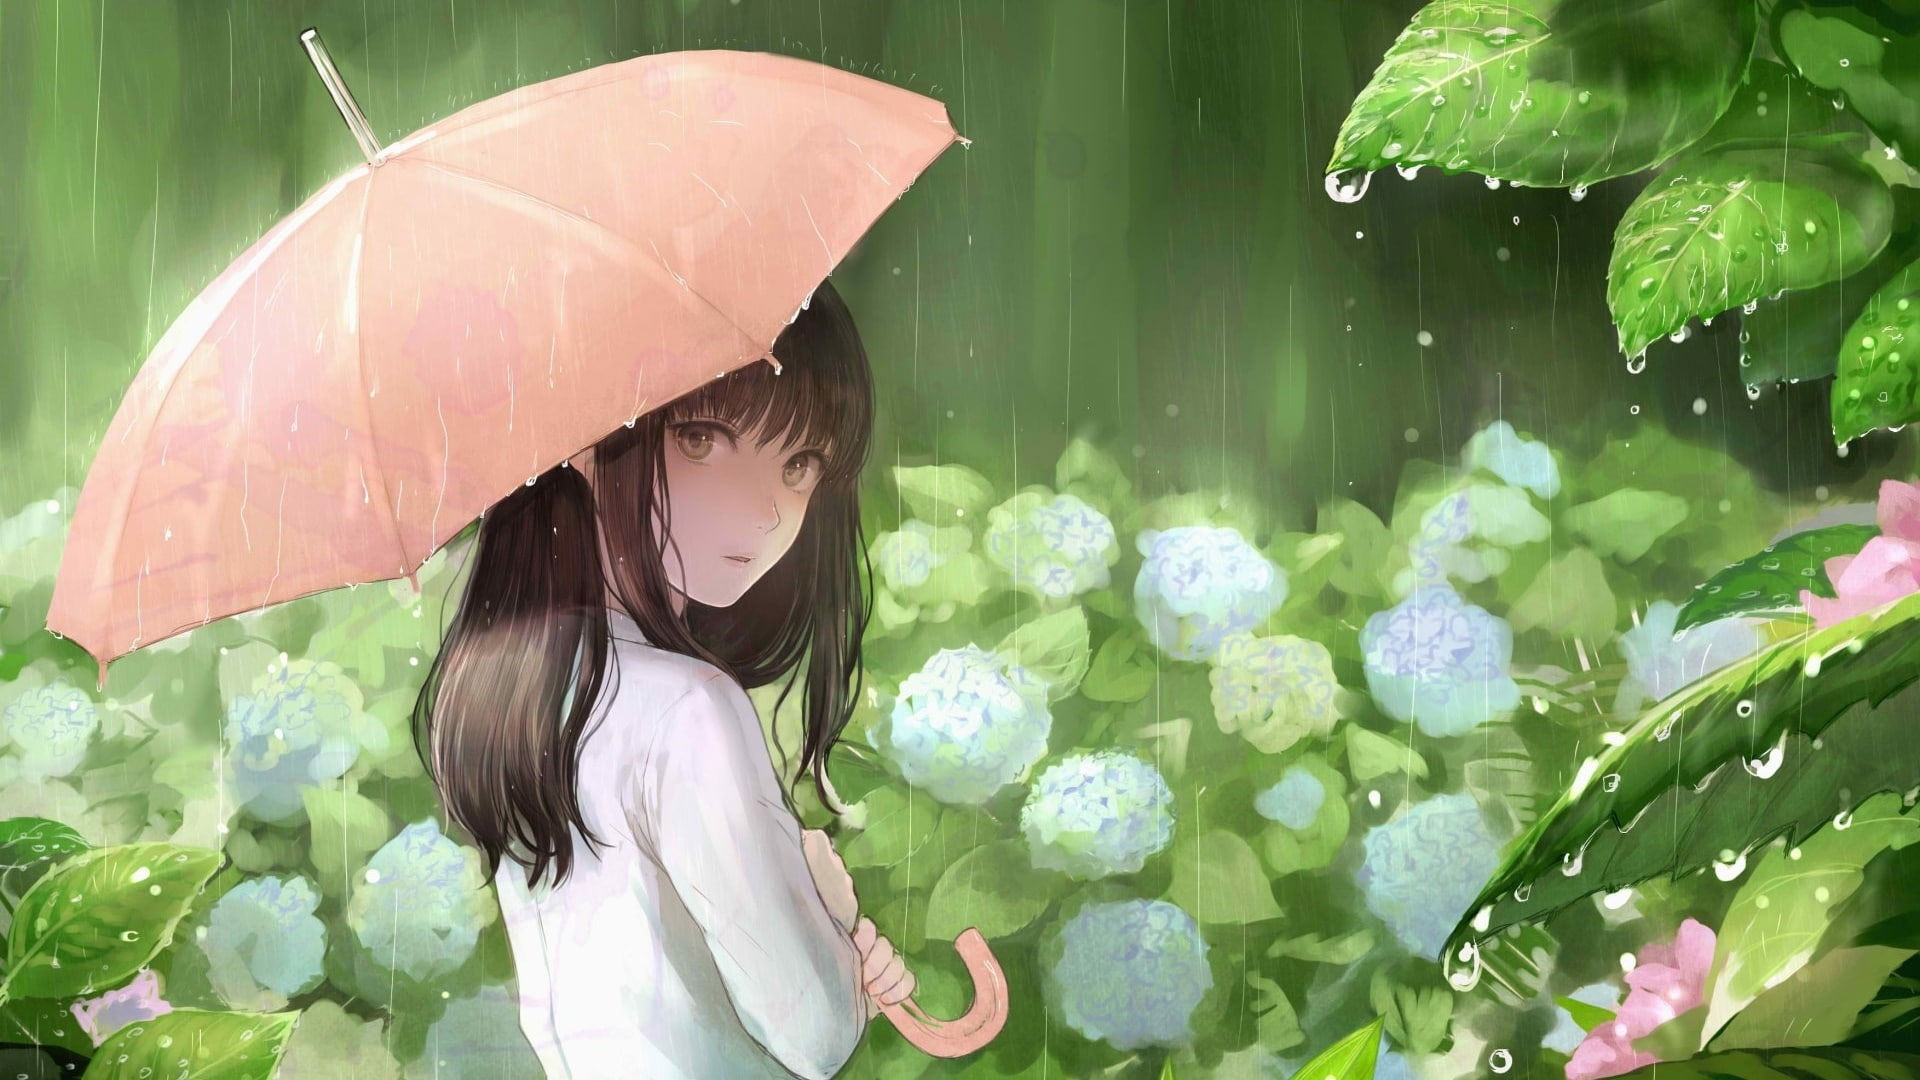 Wallpaper Flowers, Green, Anime Girl, Rainy Day, Anime Art - Wallpaperforu